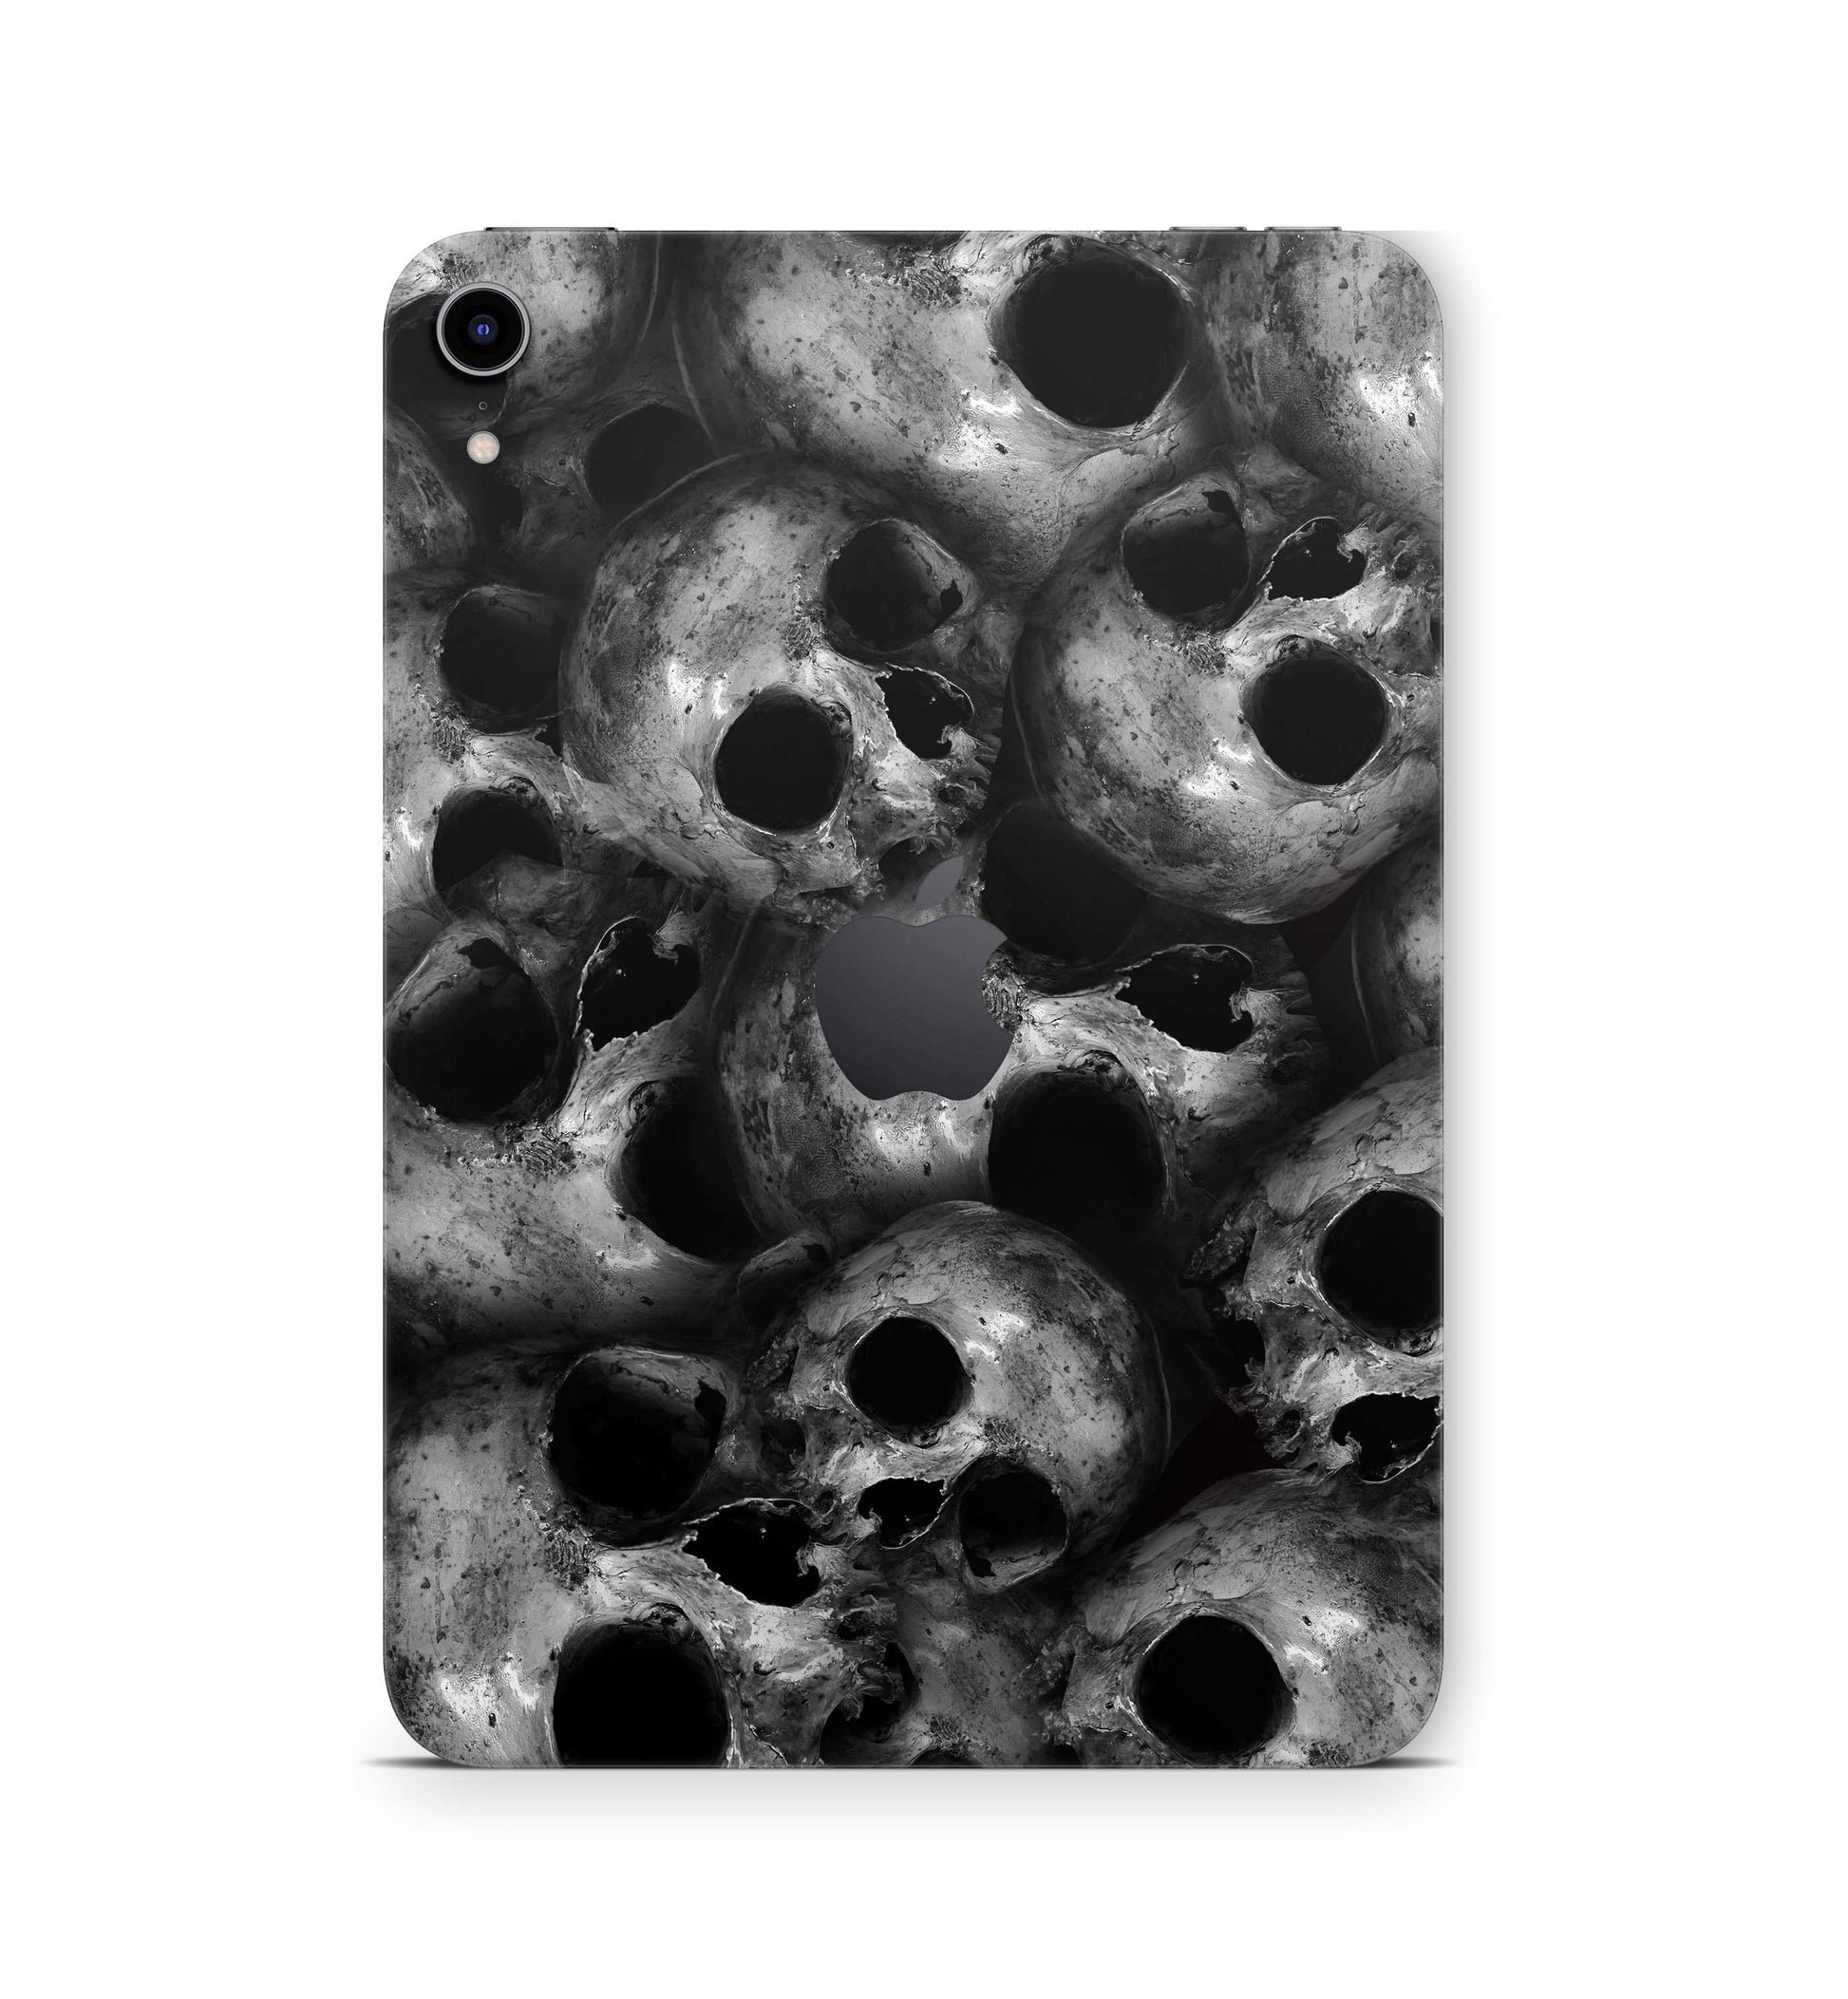 iPad Air Skin Design Cover Folie Vinyl Skins & Wraps für alle iPad Air Modelle Aufkleber Skins4u Skulls  